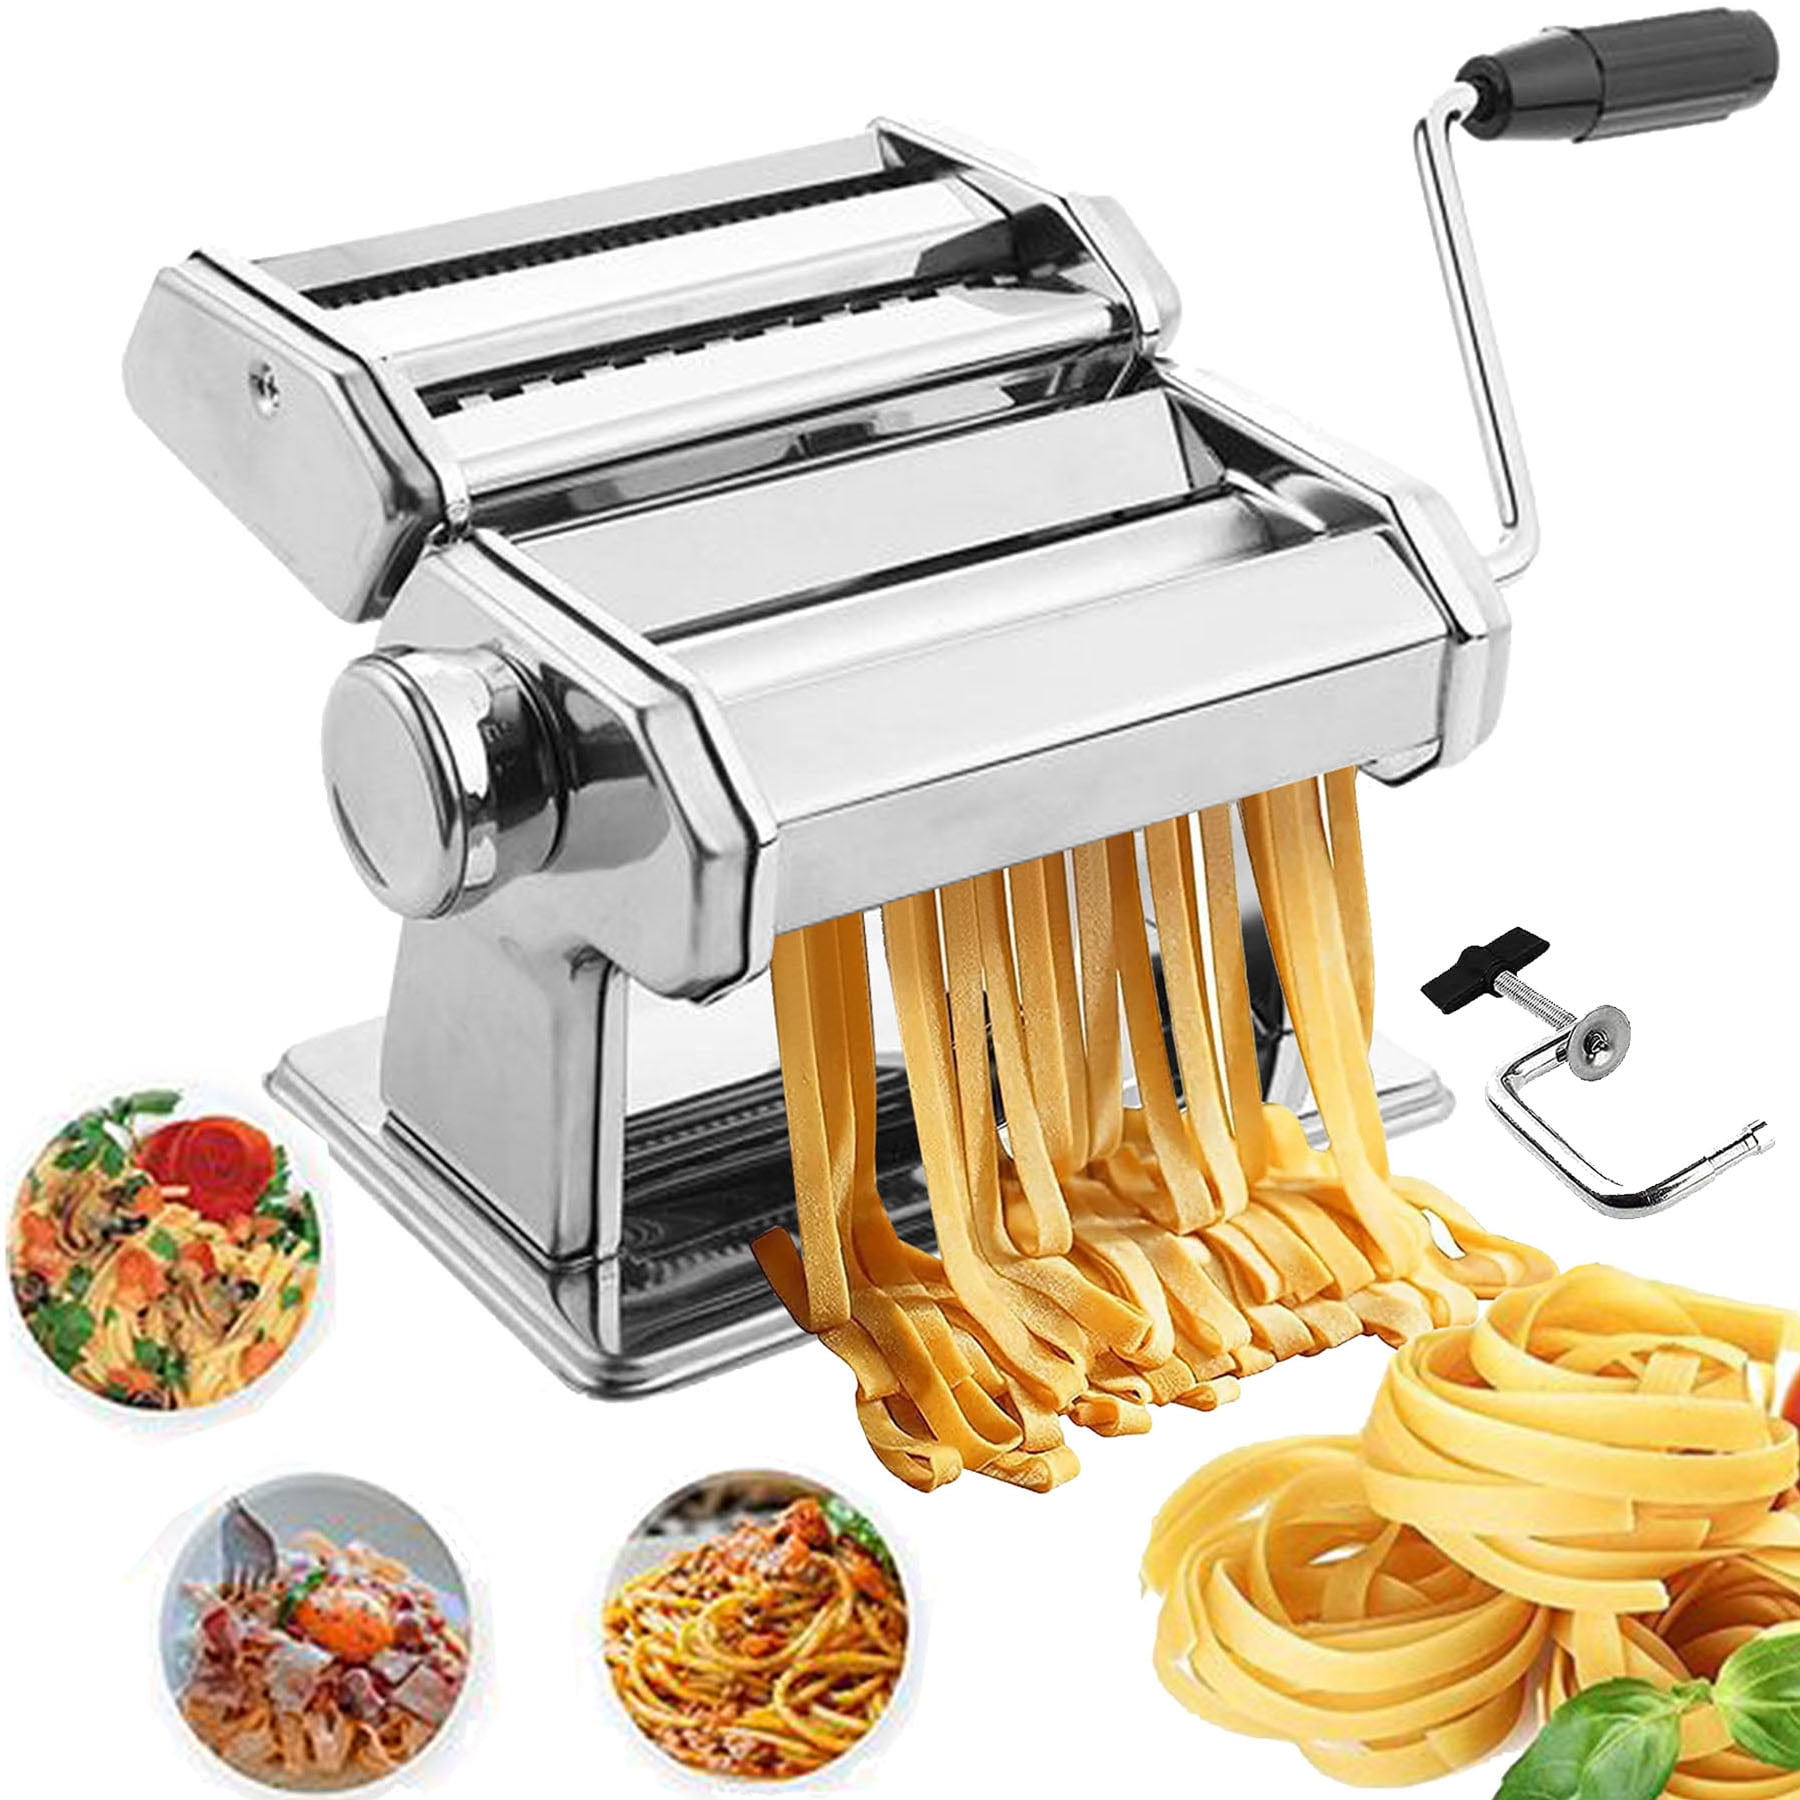 Pasta Roller Sheet Attachment for KitchenAid Stand Mixer,Pasta Maker Accessory,Pasta Roller Kit including Kitchenaid Pasta Attachment,Ravioli Maker,Noodle Lattice Roller,Spaghetti Macaroni Pasta Set 